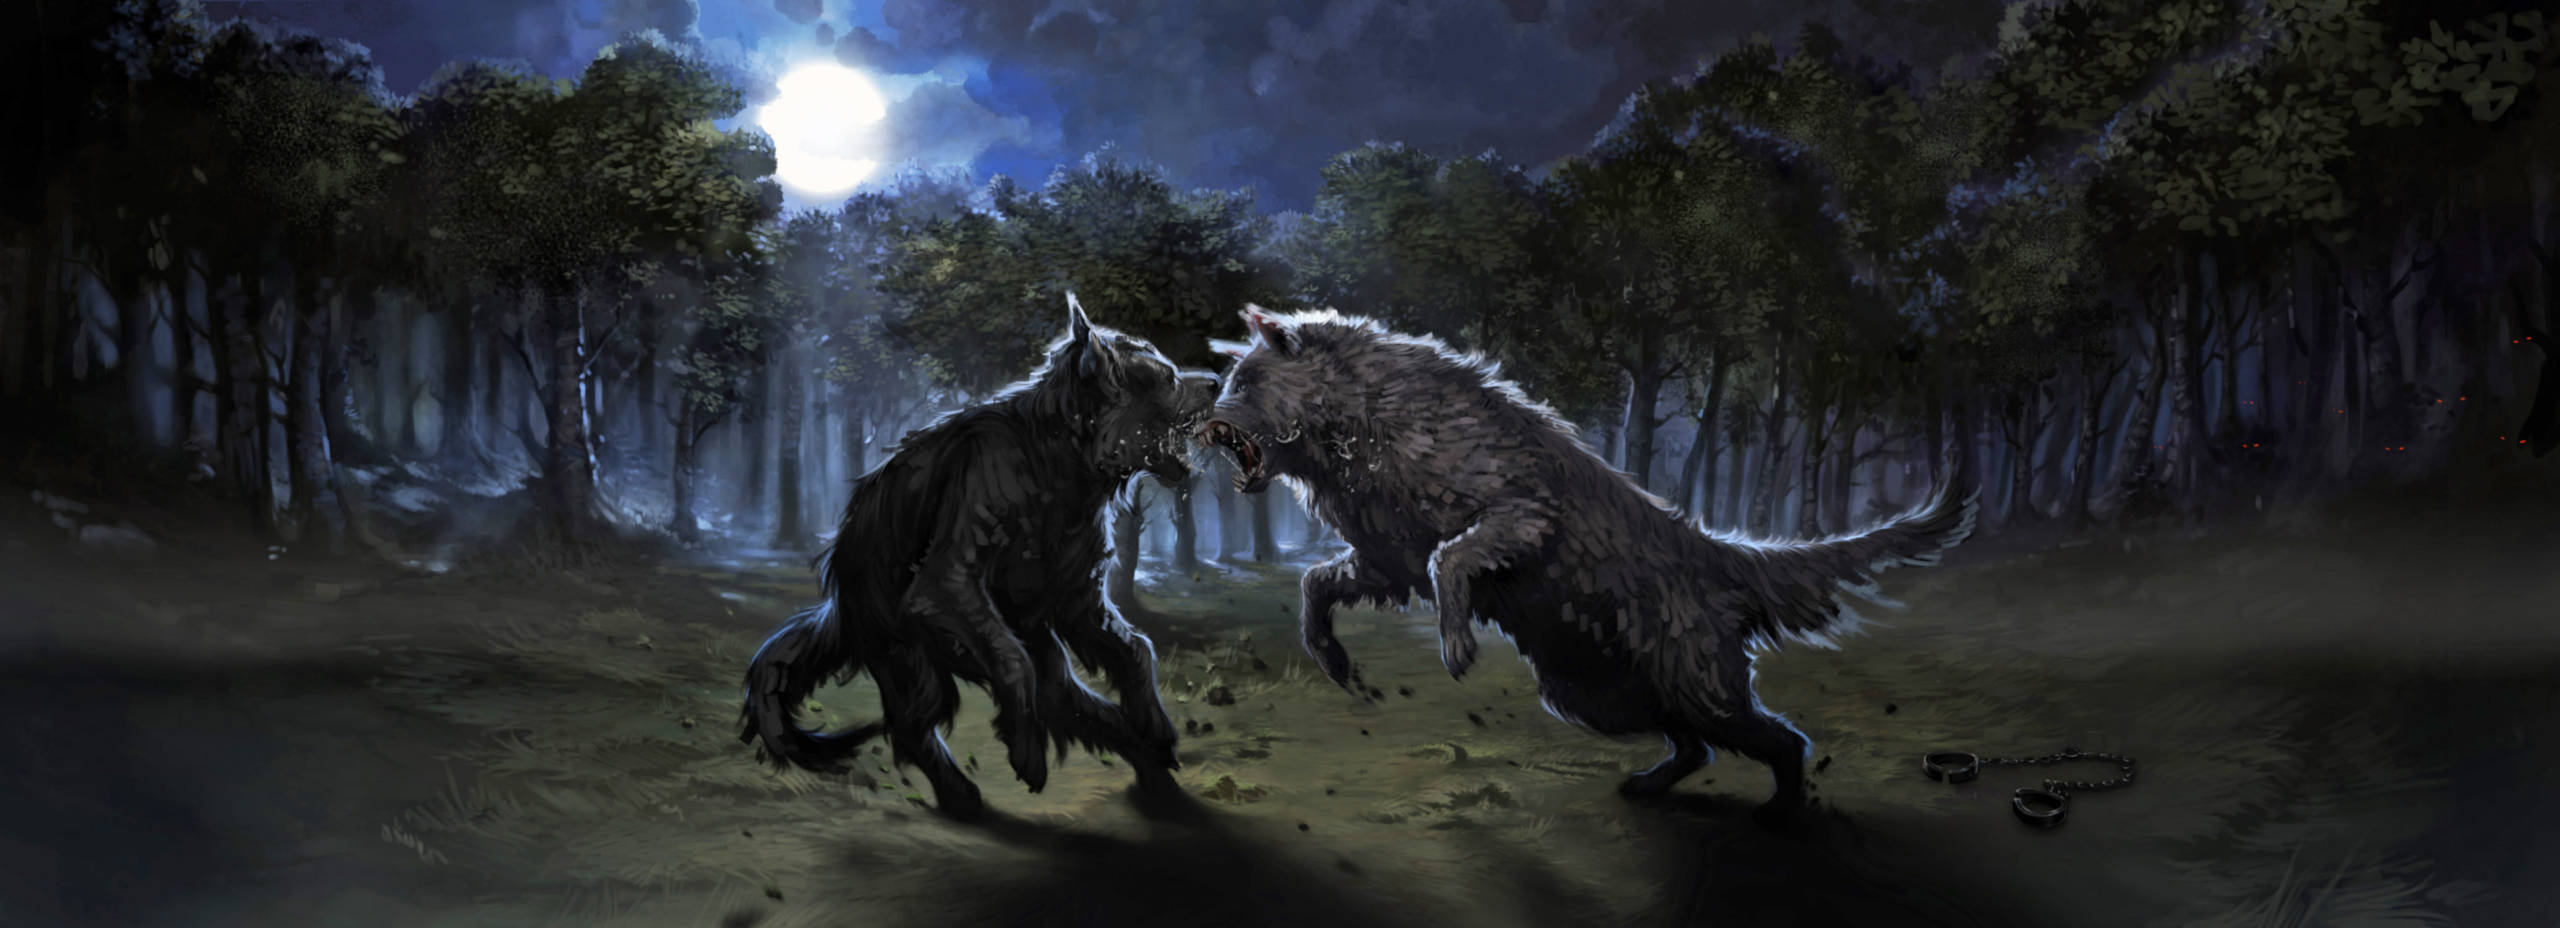 werewolf vs lycan